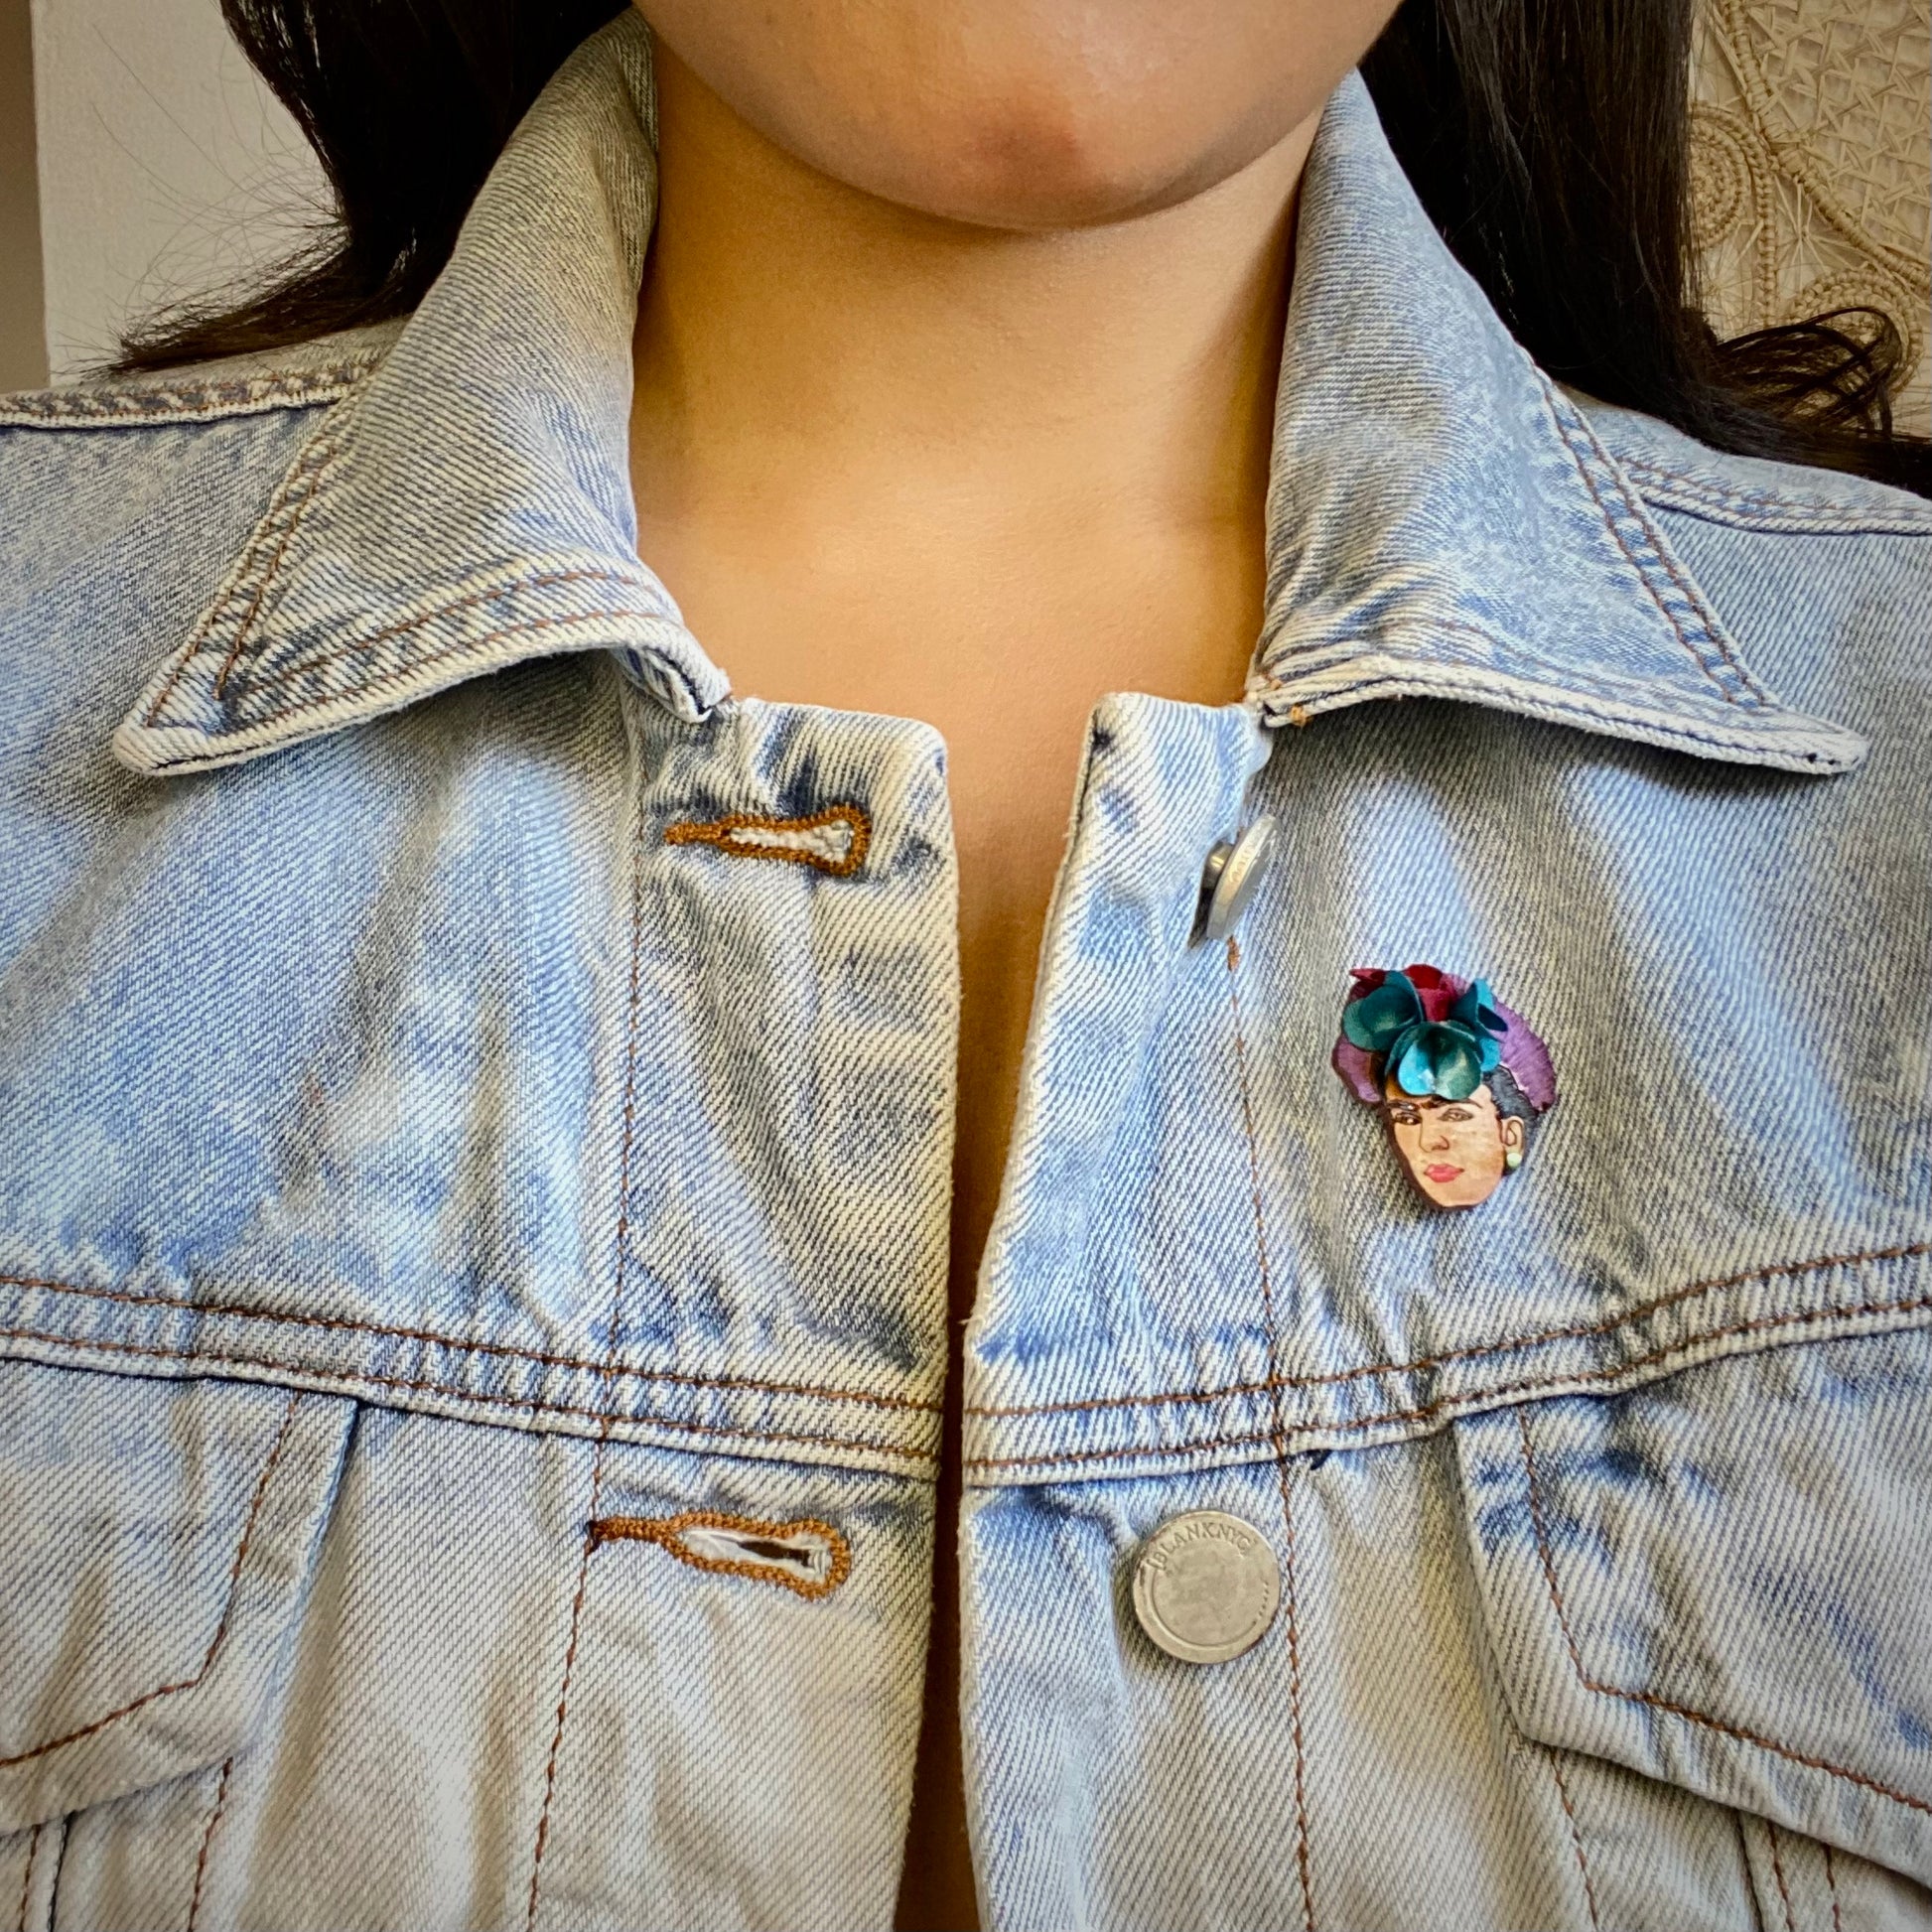 Frida Kahlo brooch pin on model wearing a jean jacket. Handmade in Colombia. 